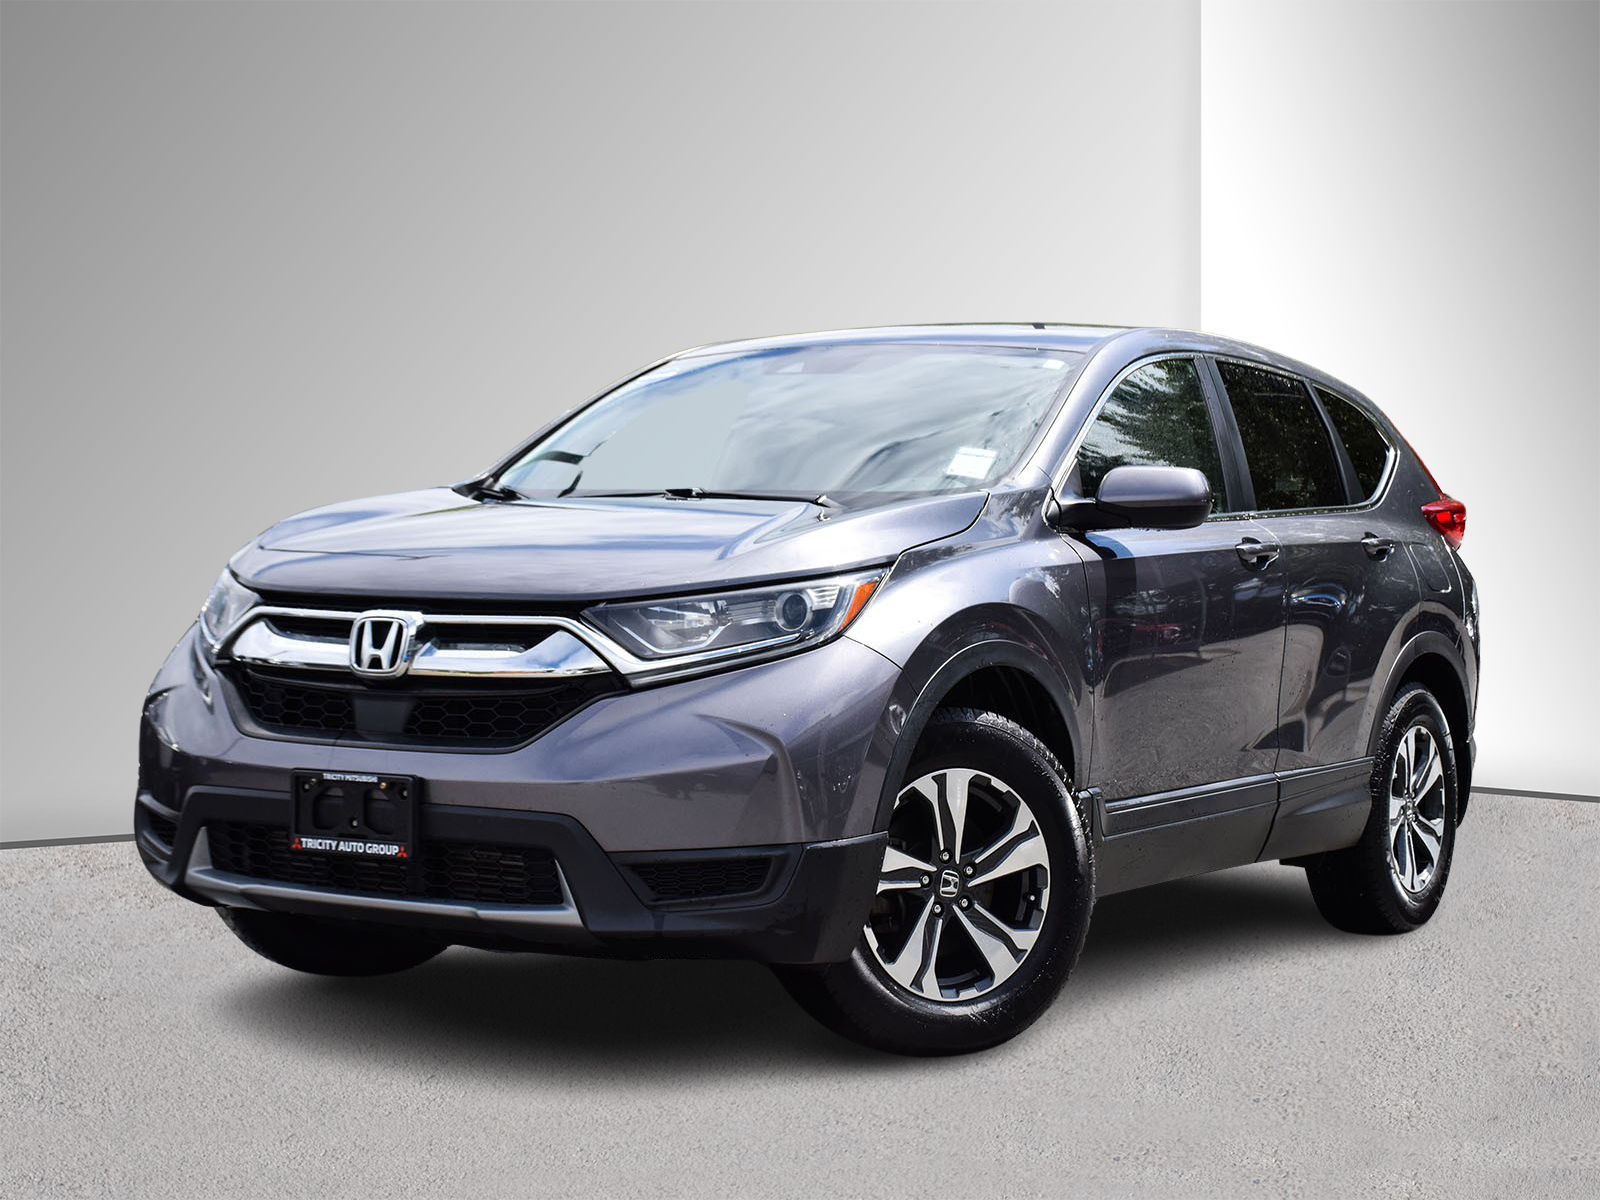 2019 Honda CR-V LX - Heated Seats, BlueTooth, Dual Climate Control